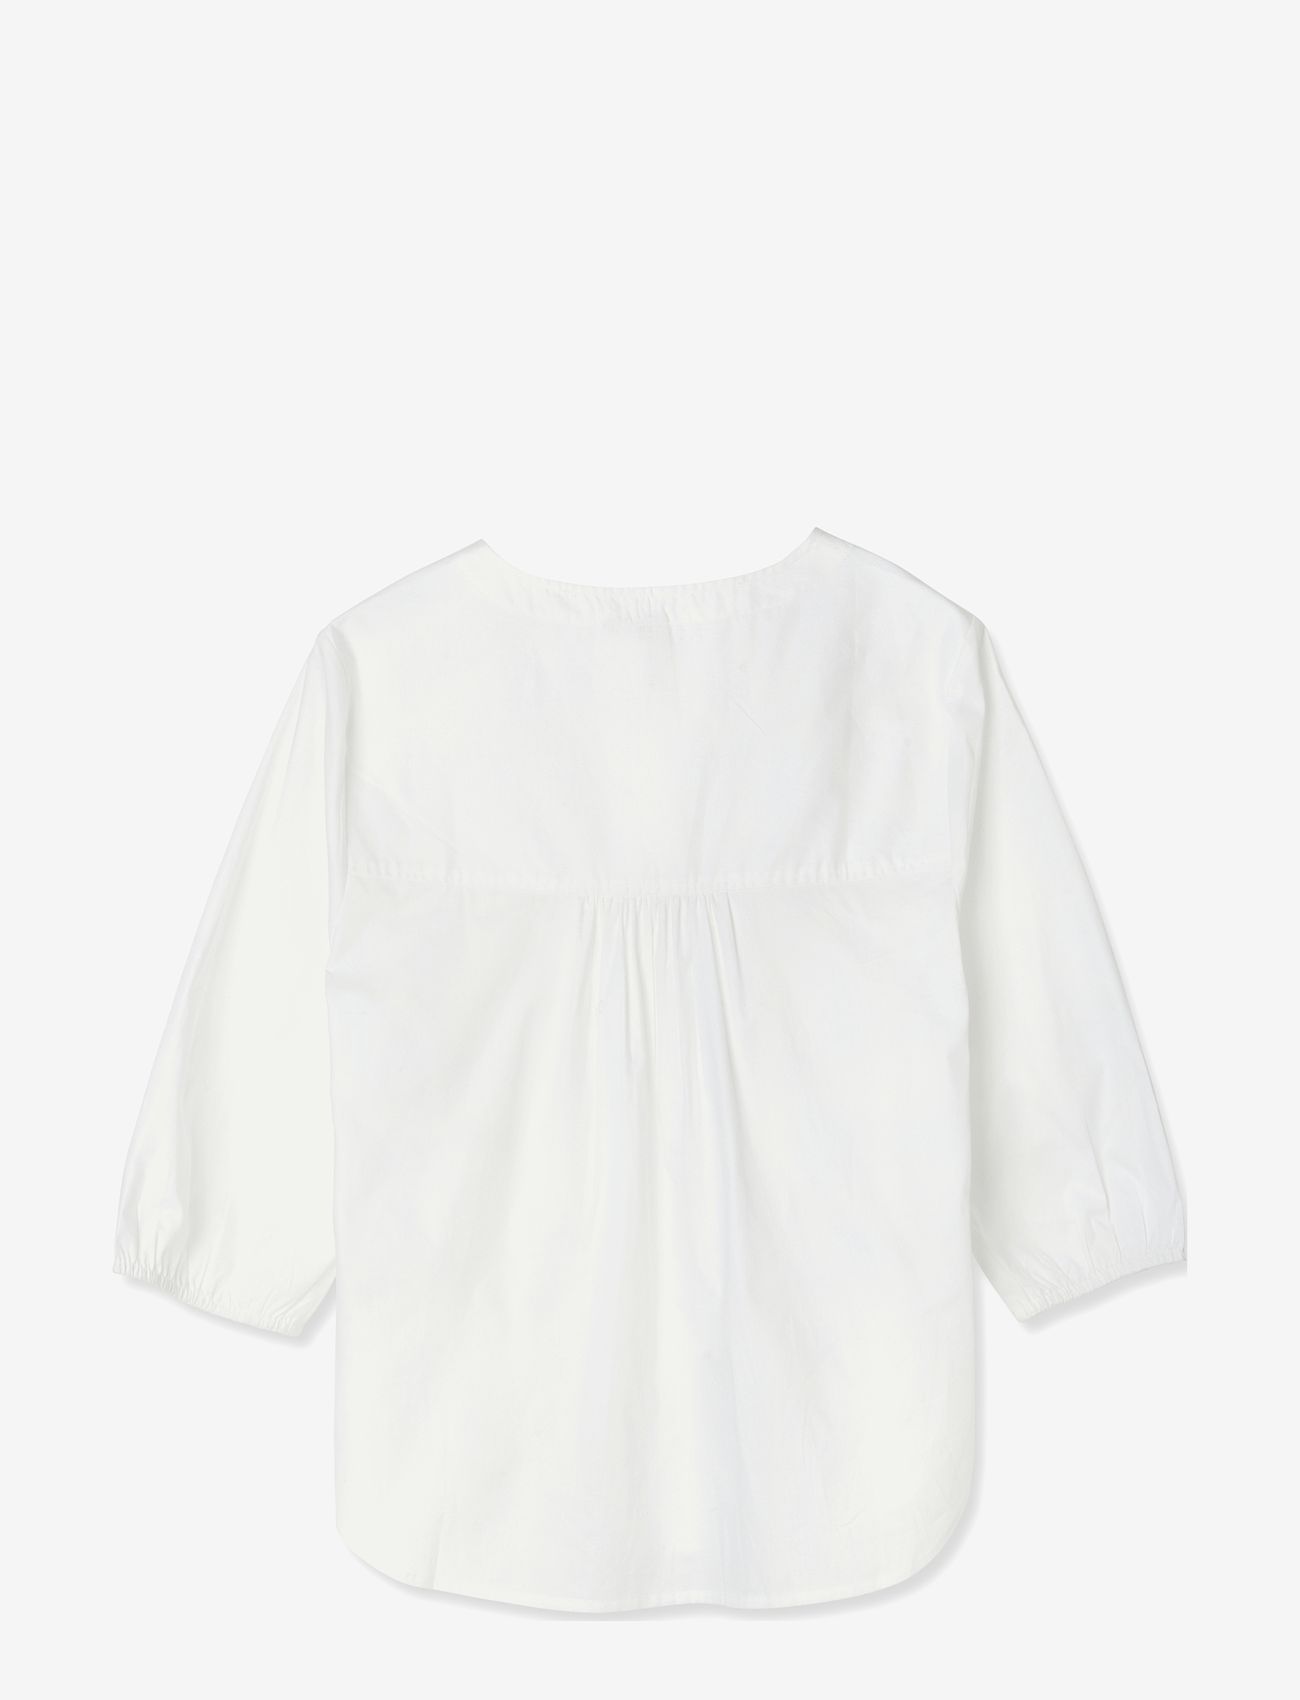 Juna - Soft Adele shirt - moterims - white - 1